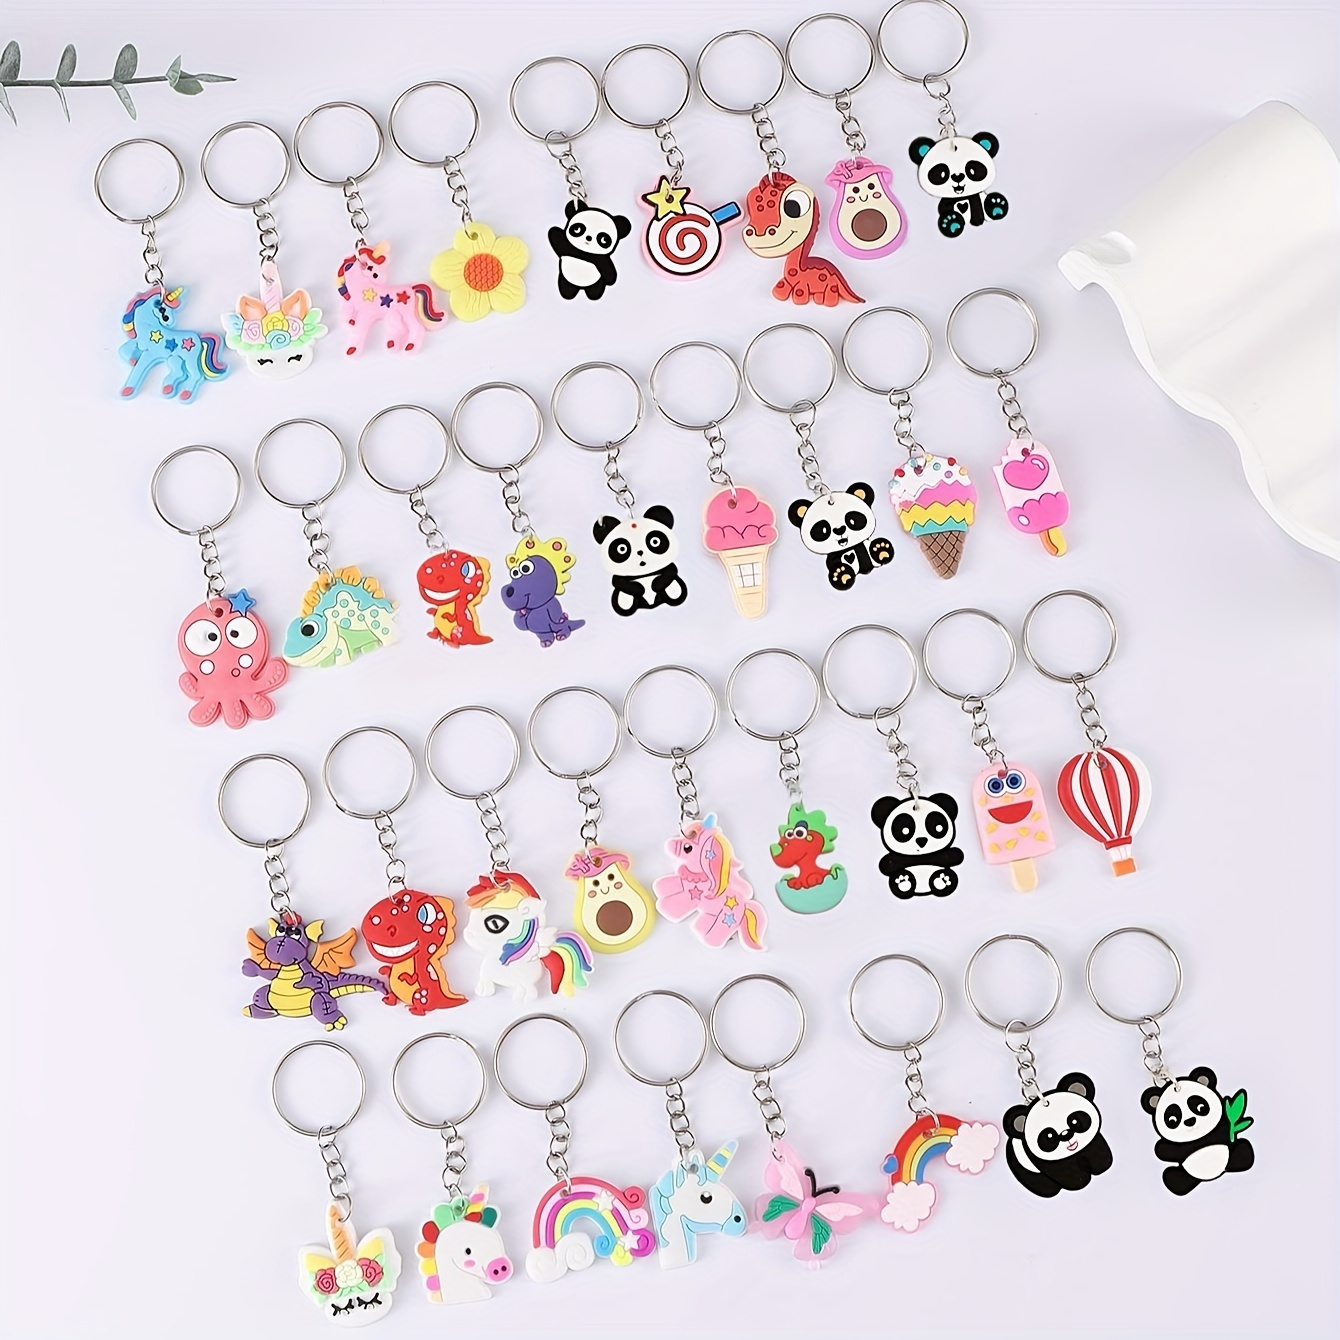 

100-piece Cartoon Keychain Set - Cute Panda, Rainbow & Avocado Designs For Bags & Keys - Fashionable Women's Accessories